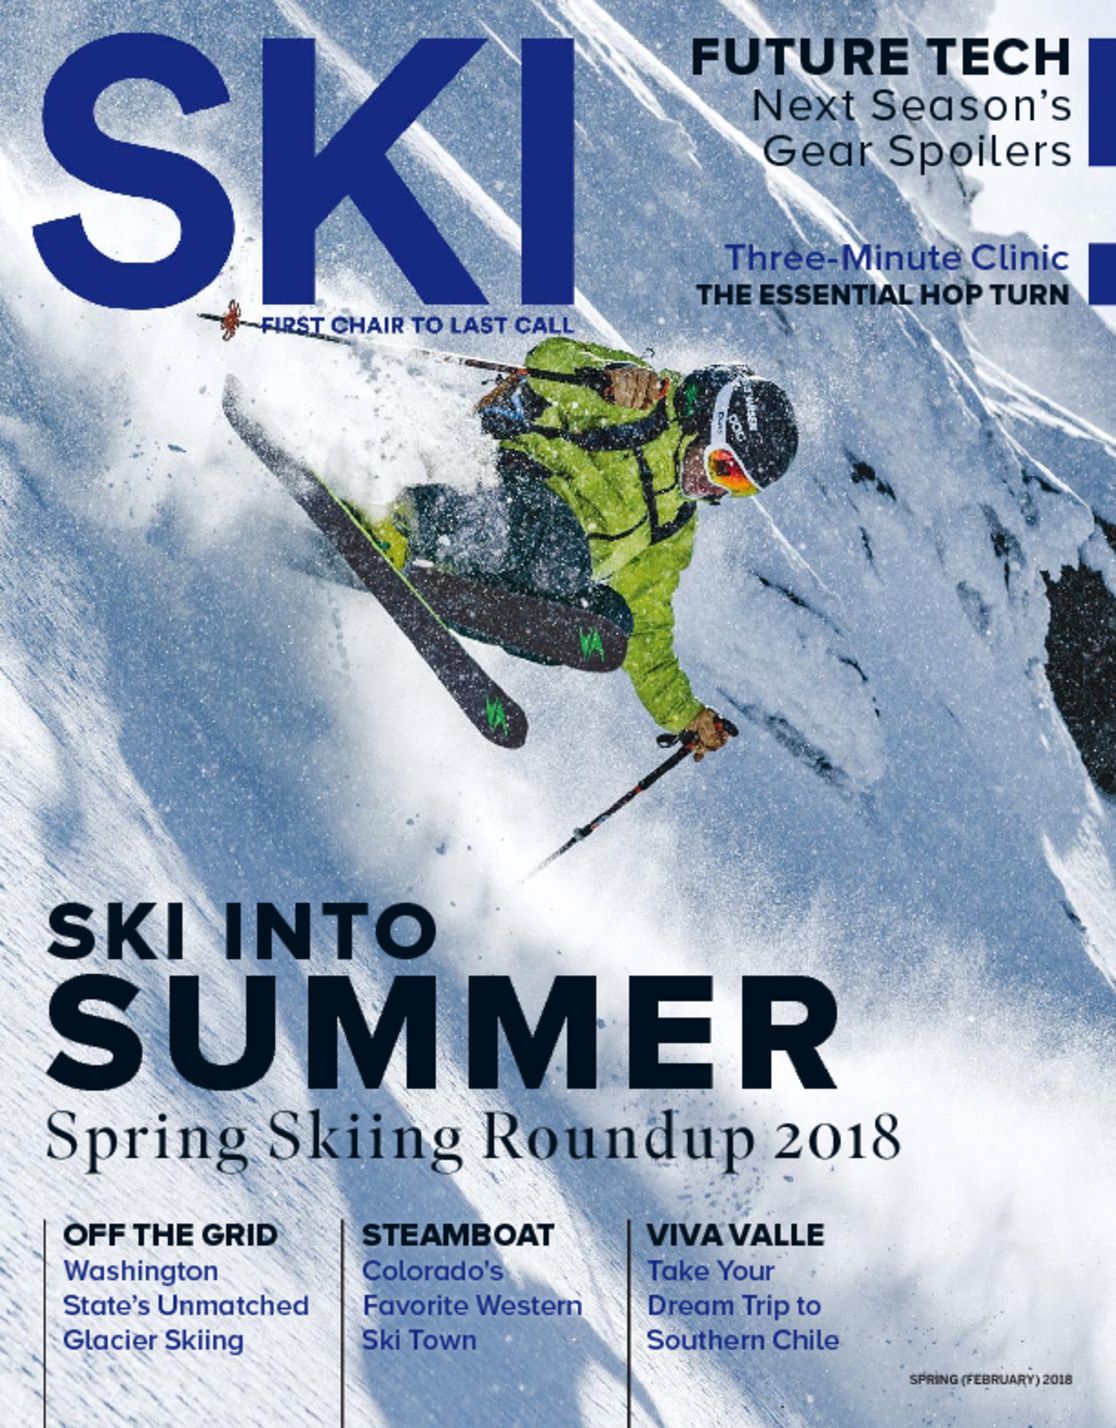 Ski Magazine Your Guide to Skiing